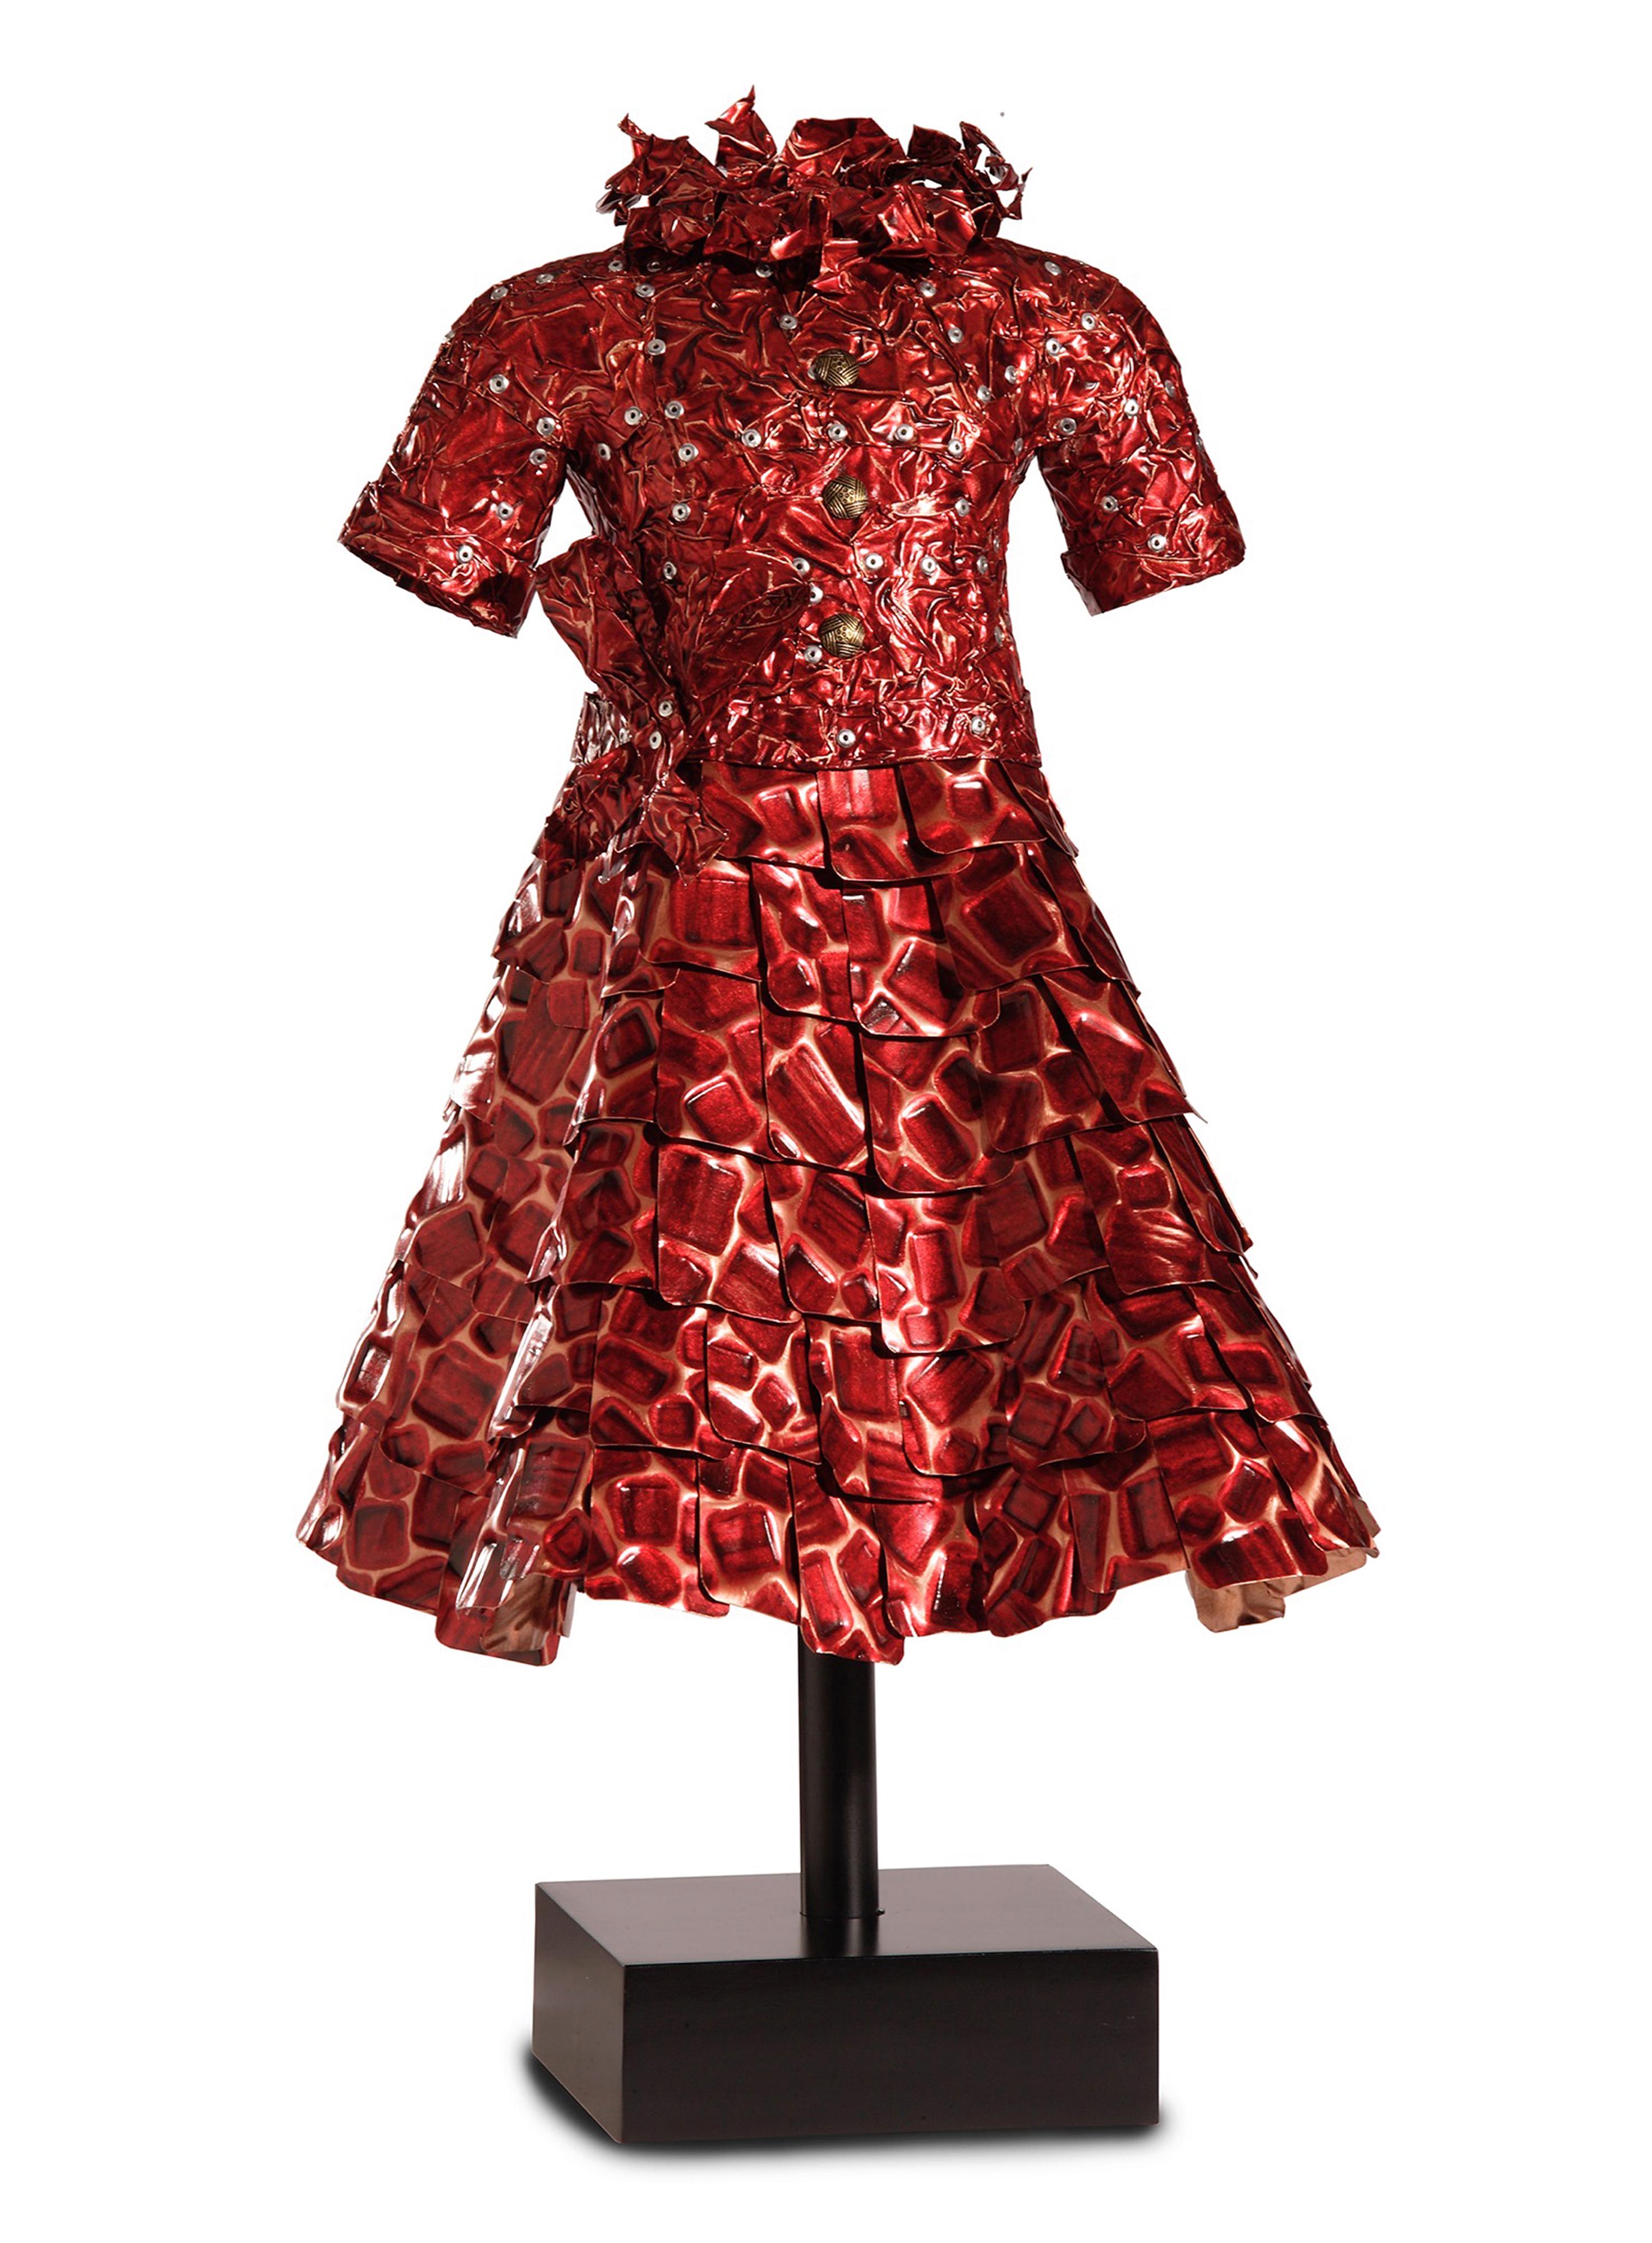 John Petrey Figurative Sculpture - 'Lina' Mixed Media, Found Object Sculpture of a Red Dress